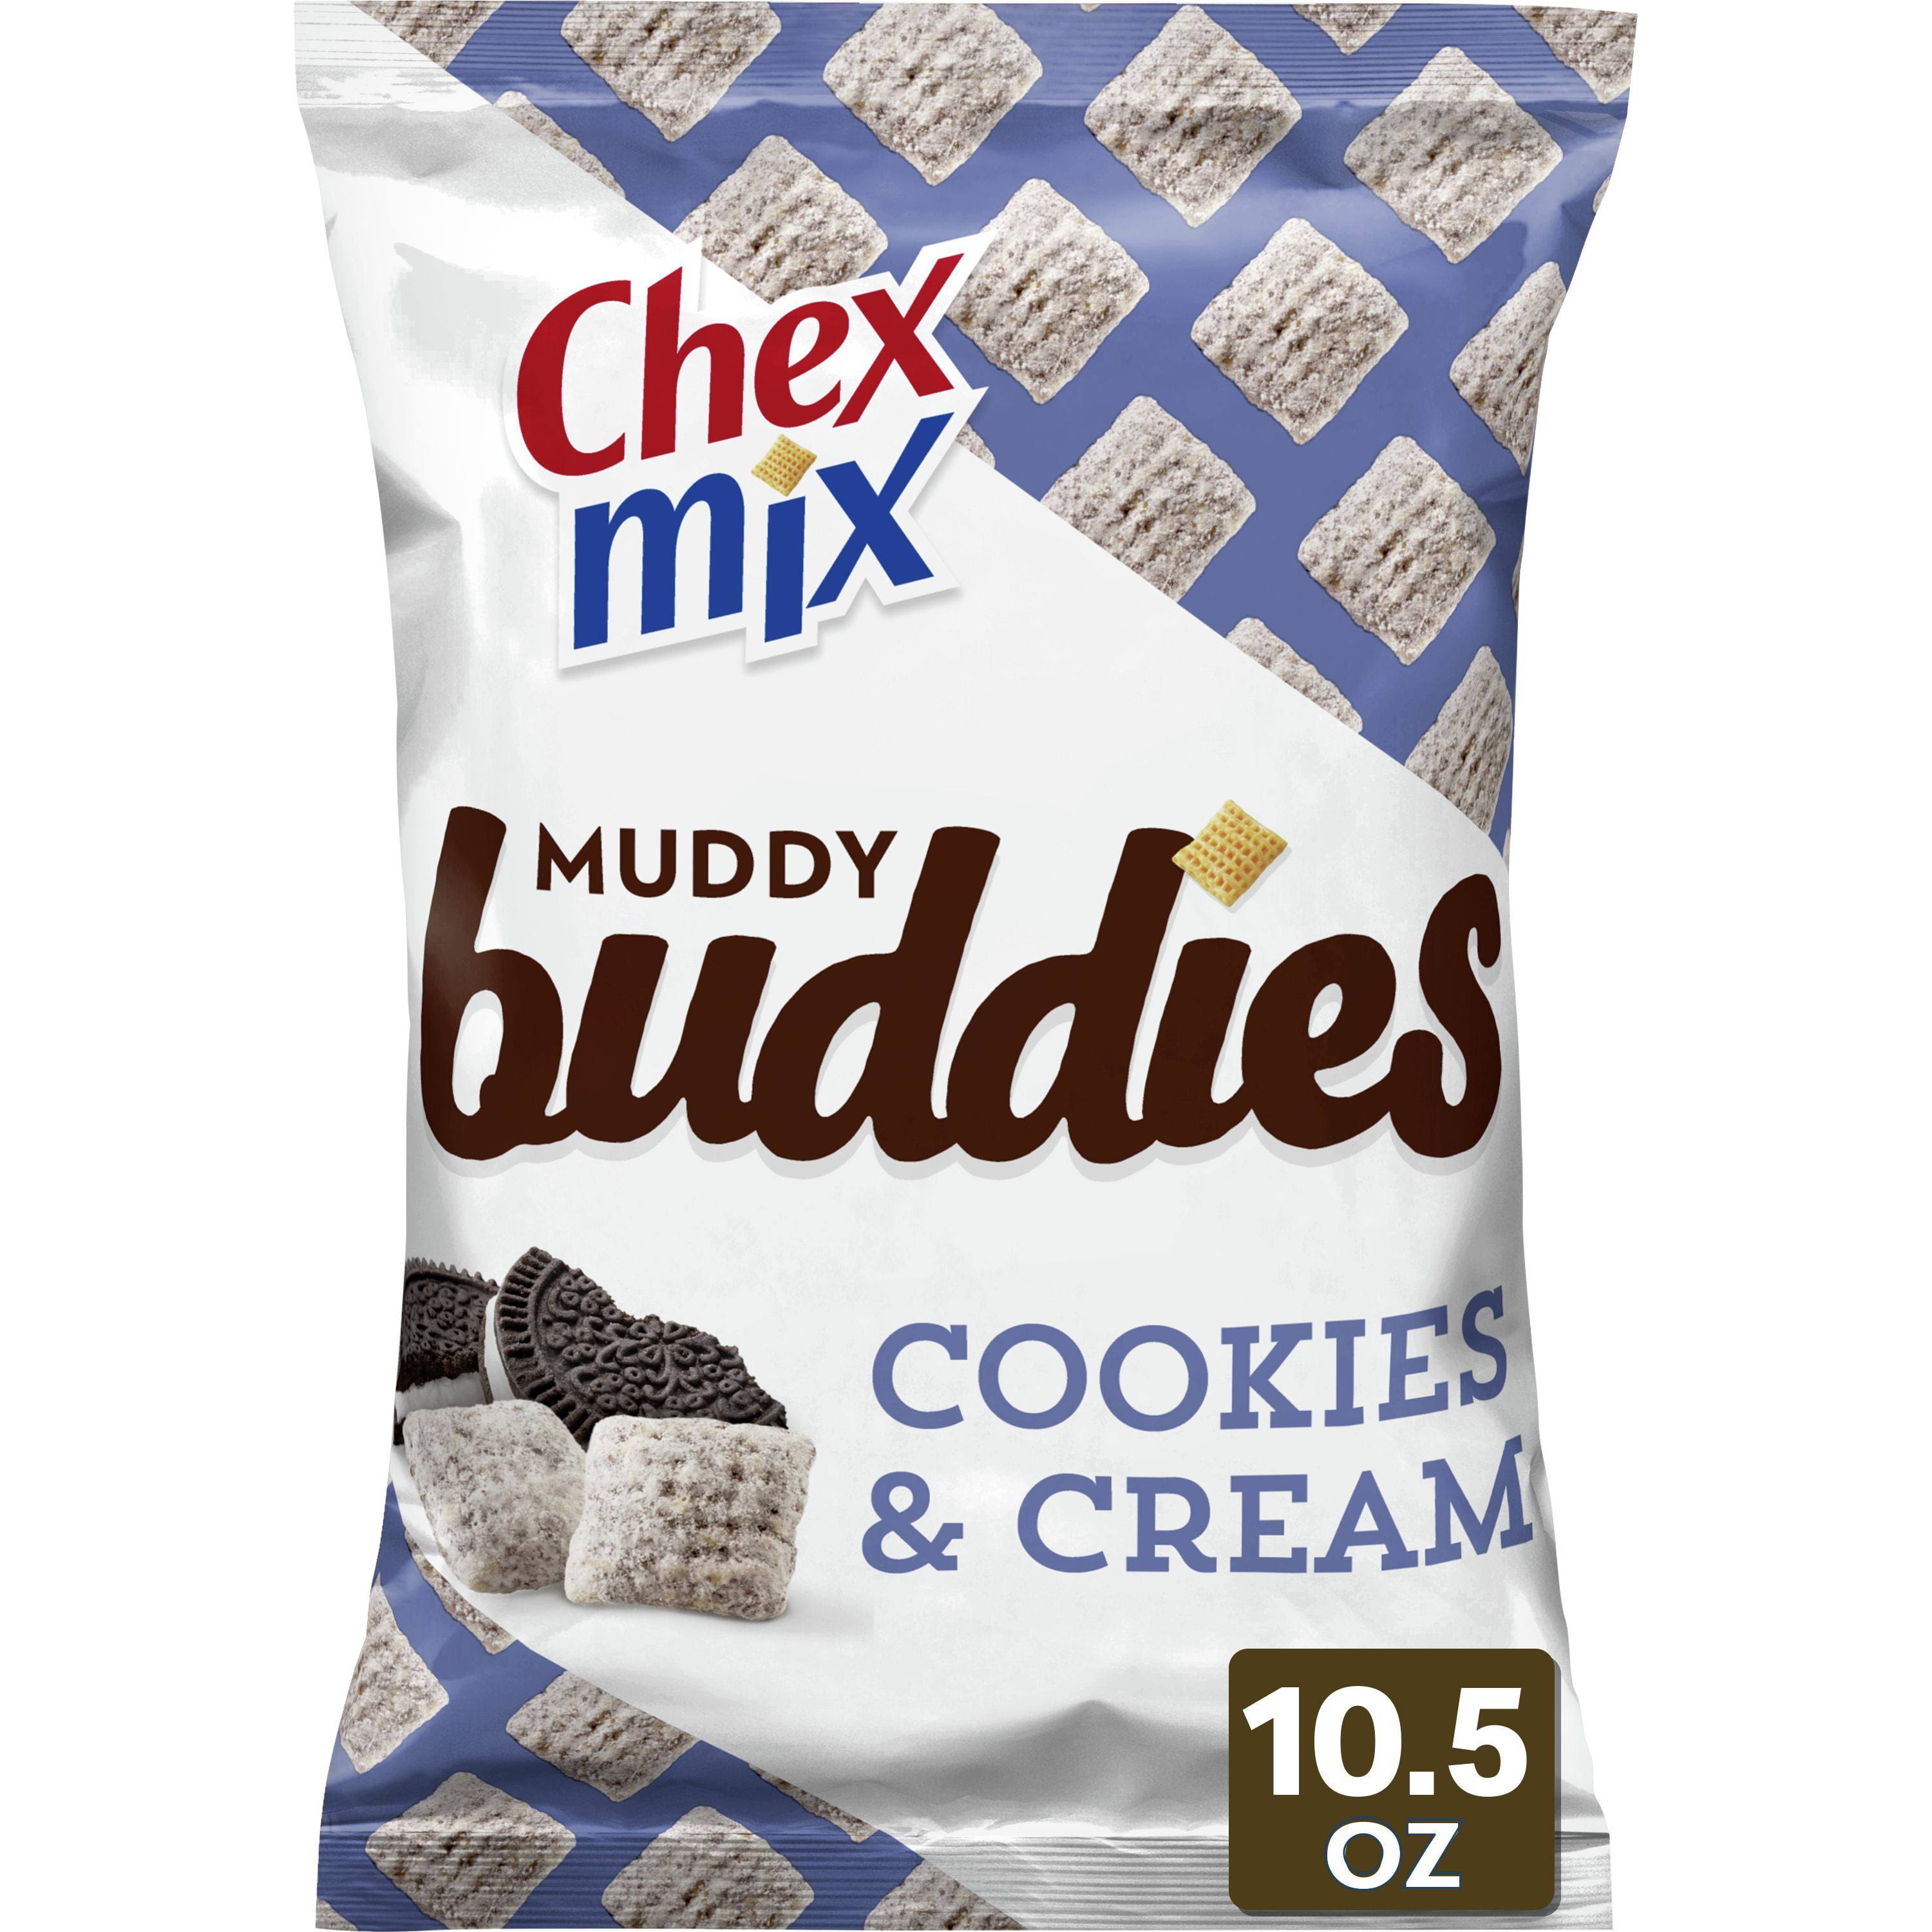 Chex Mix Muddy Buddies Cookies & Cream 10.5oz (297g)